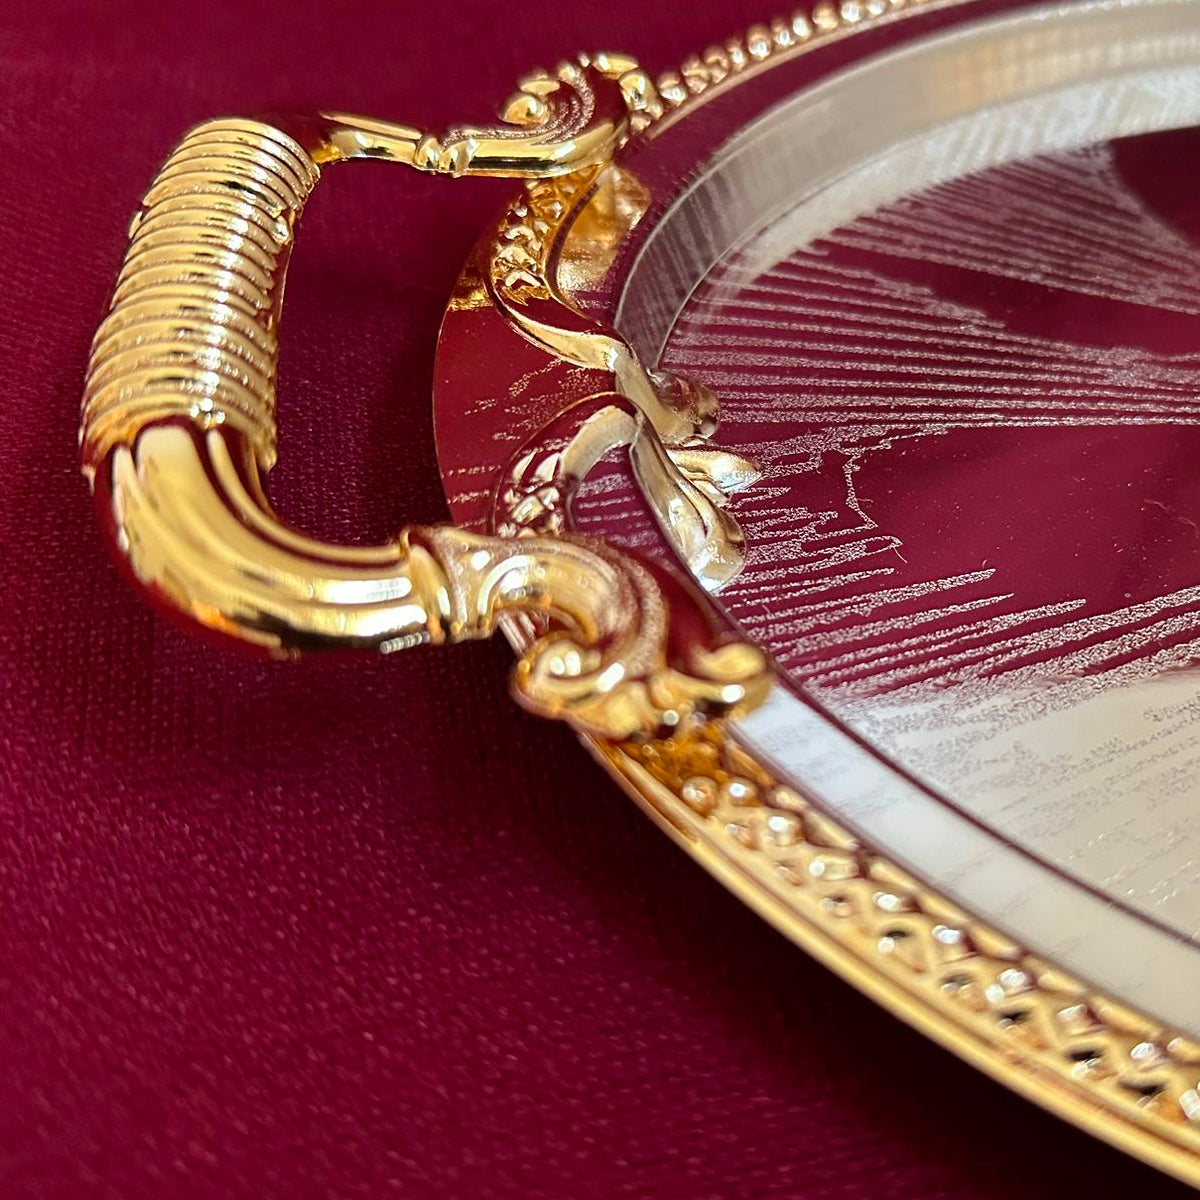 Vergoldetes Meisterstück: Mittelgroßes ovales Tablett mit edlem Glanz